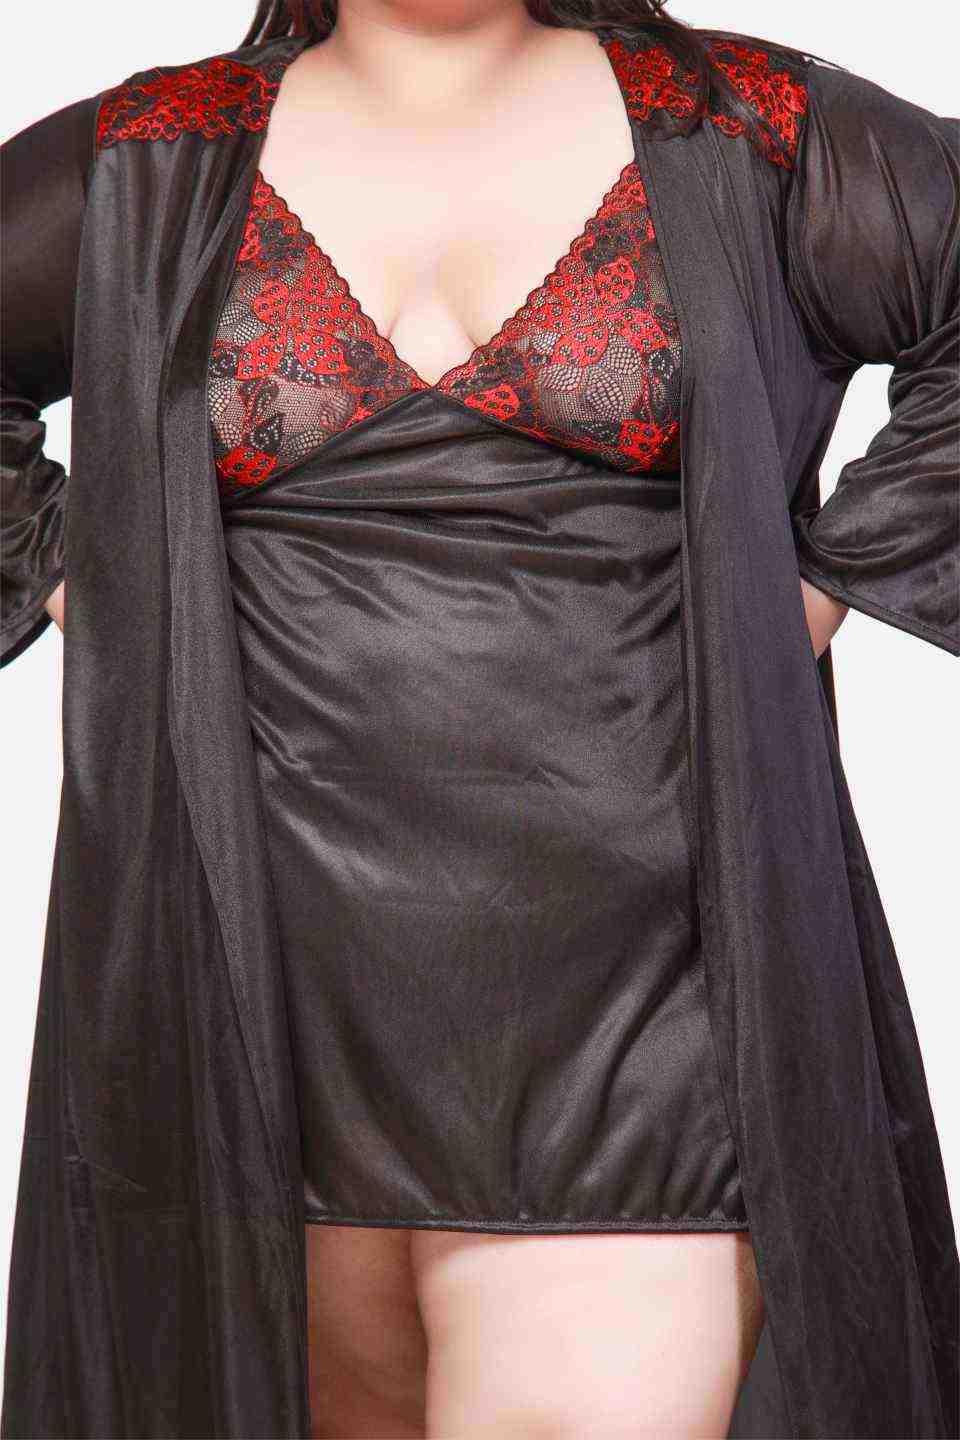 Hot Two Piece Black Babydoll Night Dress for Women 301Kg